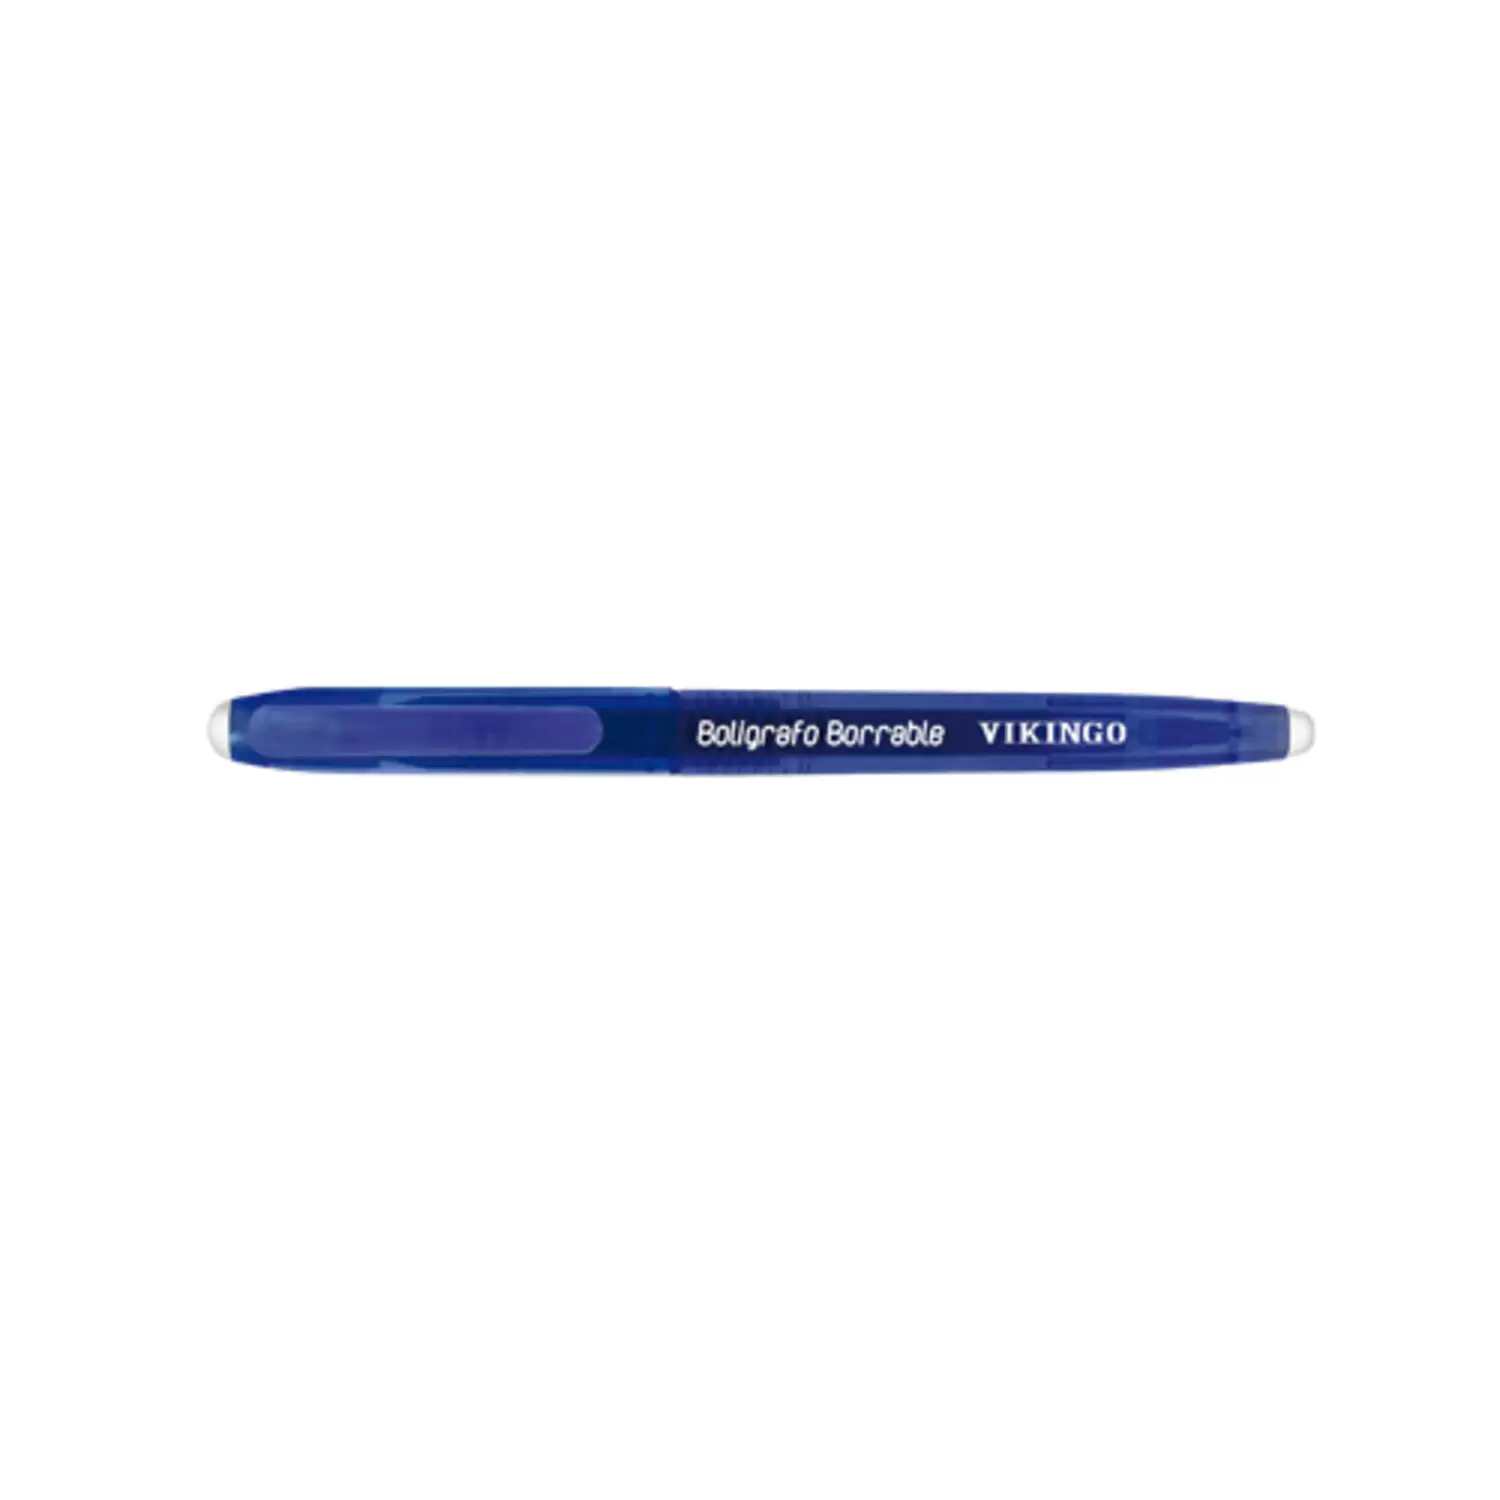 Boligrafo vikingo borrable vk-bb-12 azul - Las mejores ofertas